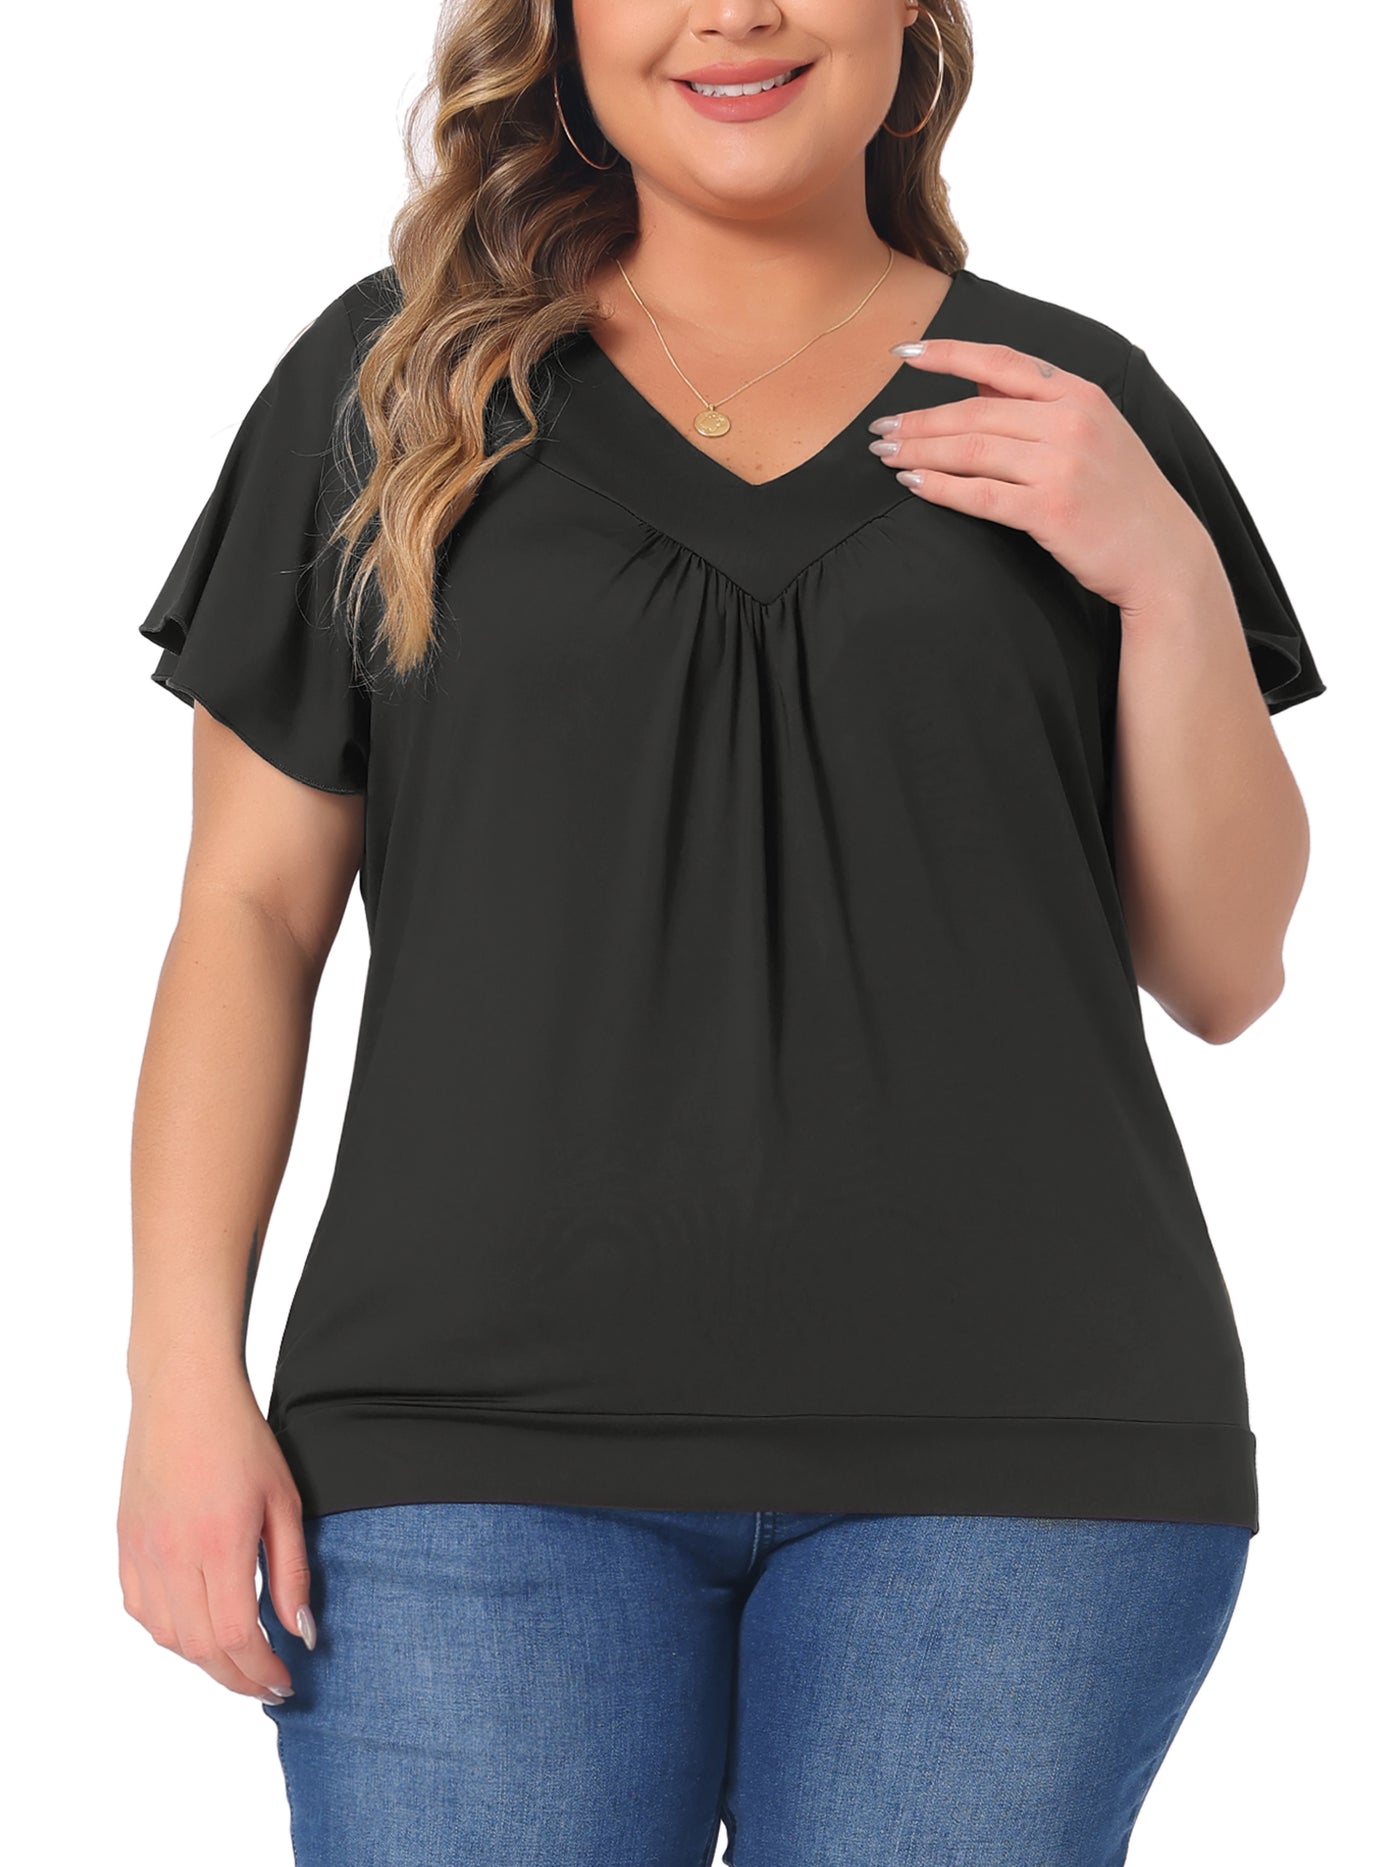 Bublédon Plus Size Top for Women V Neck Ruffle Short Sleeve T Shirt Summer Tee Tops